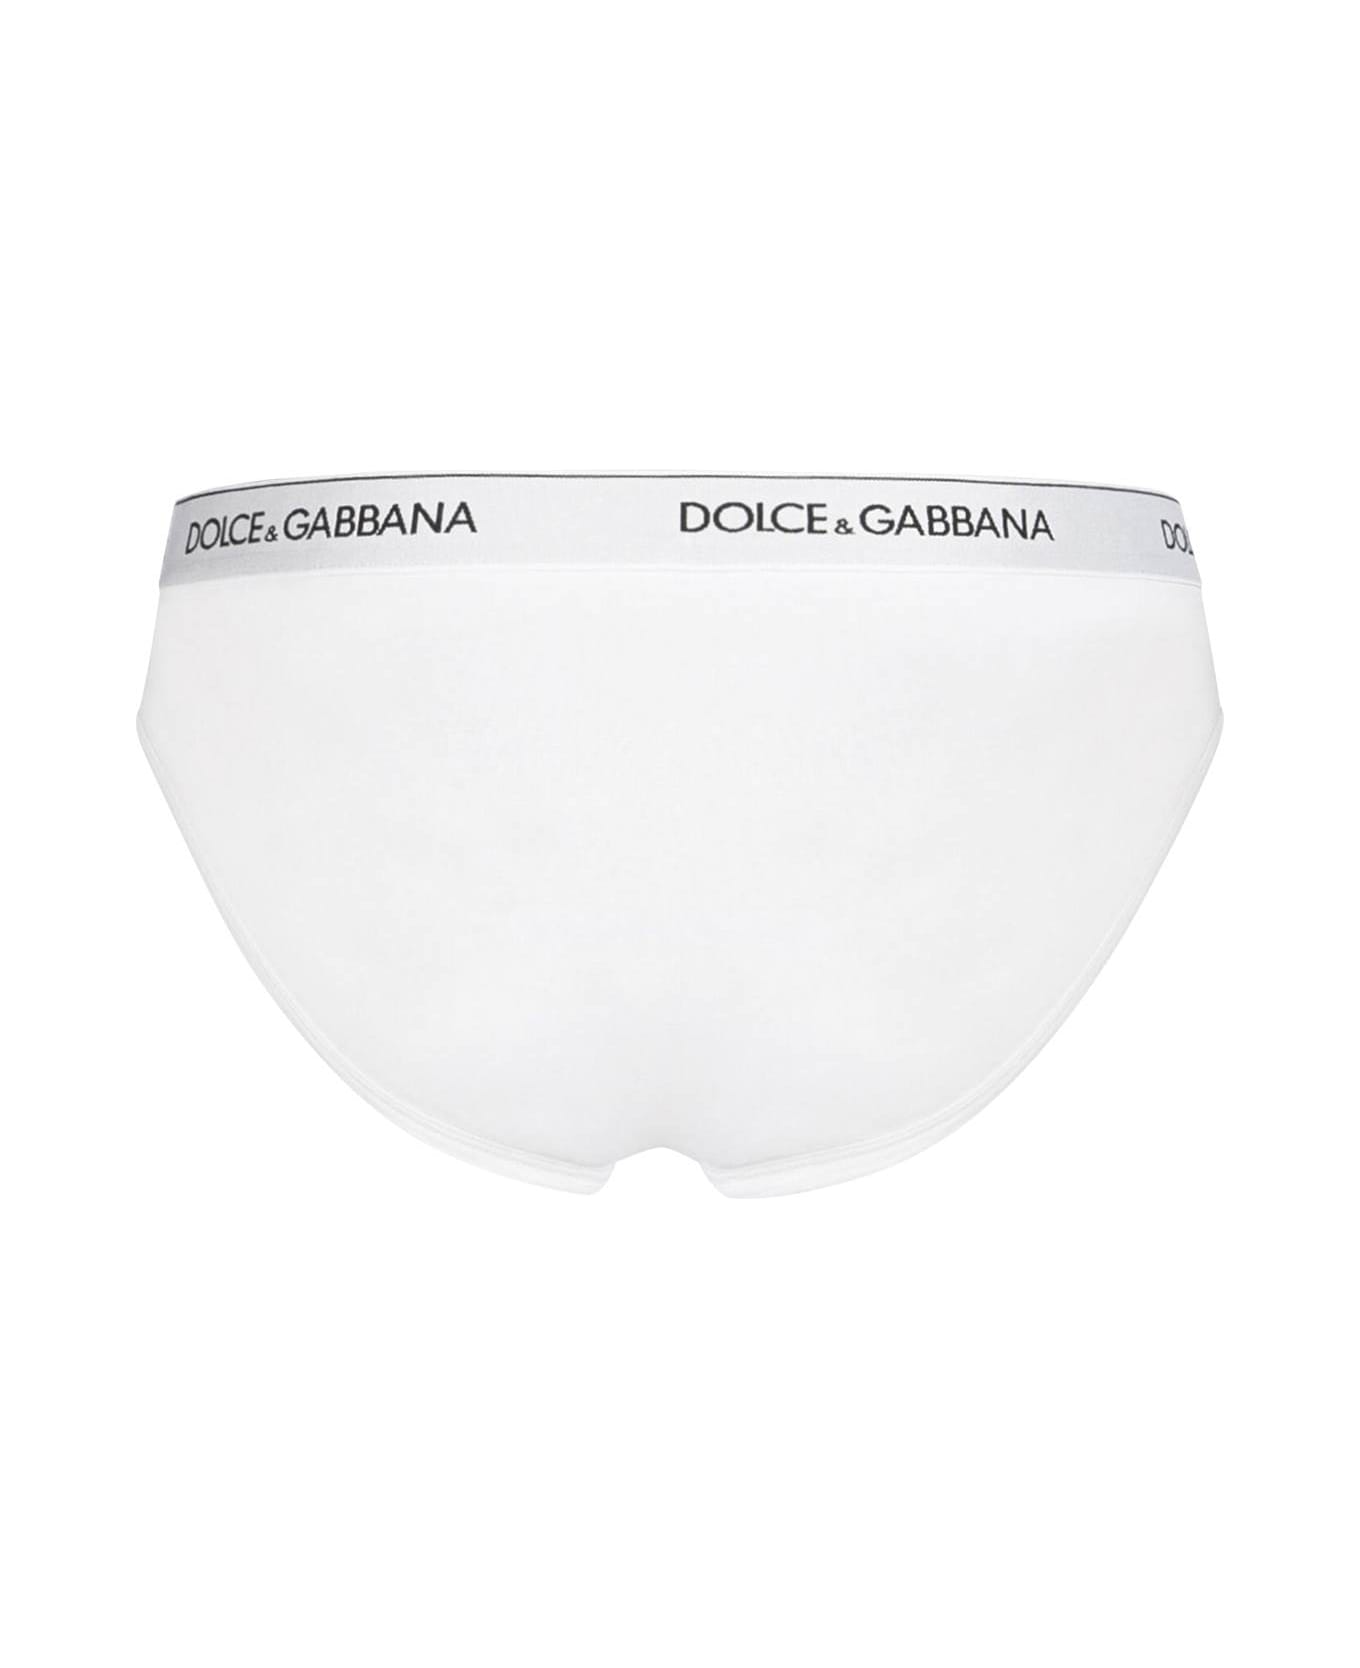 Dolce & Gabbana White Cotton Briefs - White